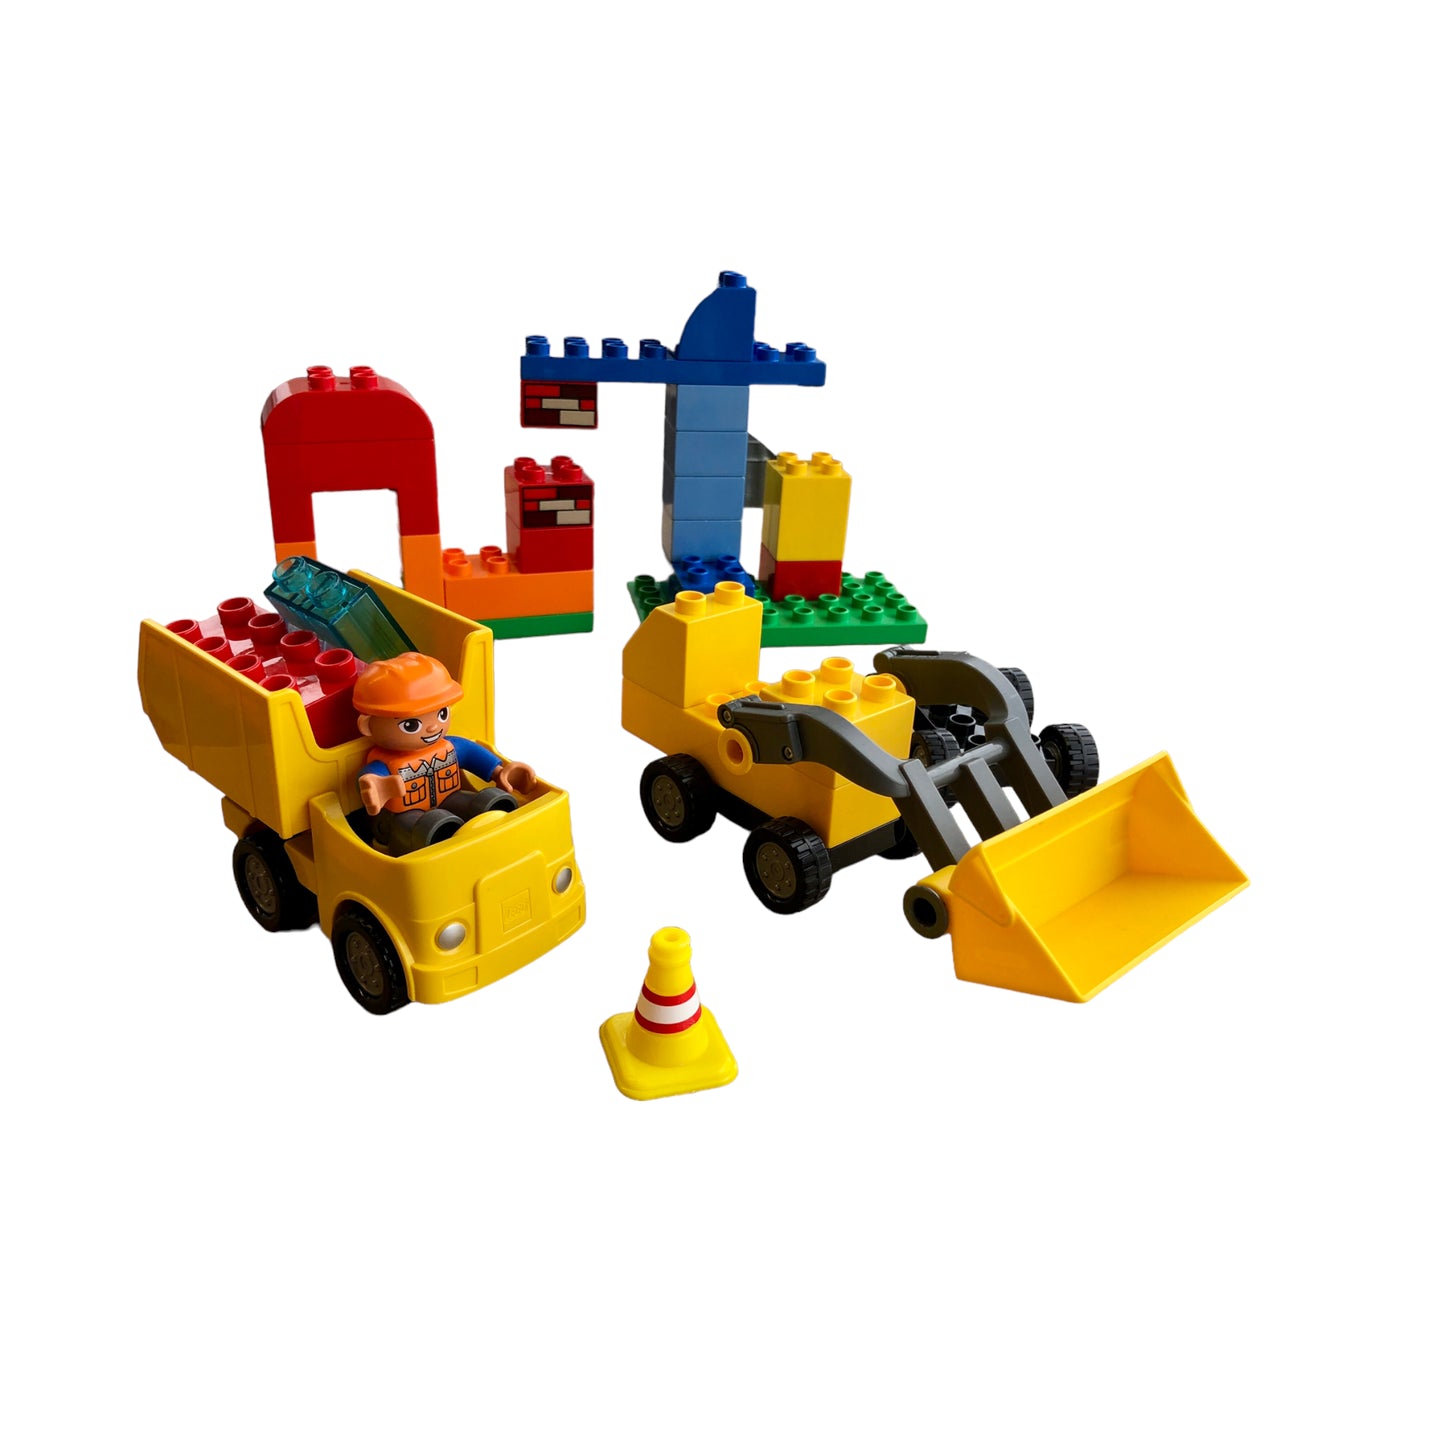 LEGO® Duplo 10518 Mon premier chantier